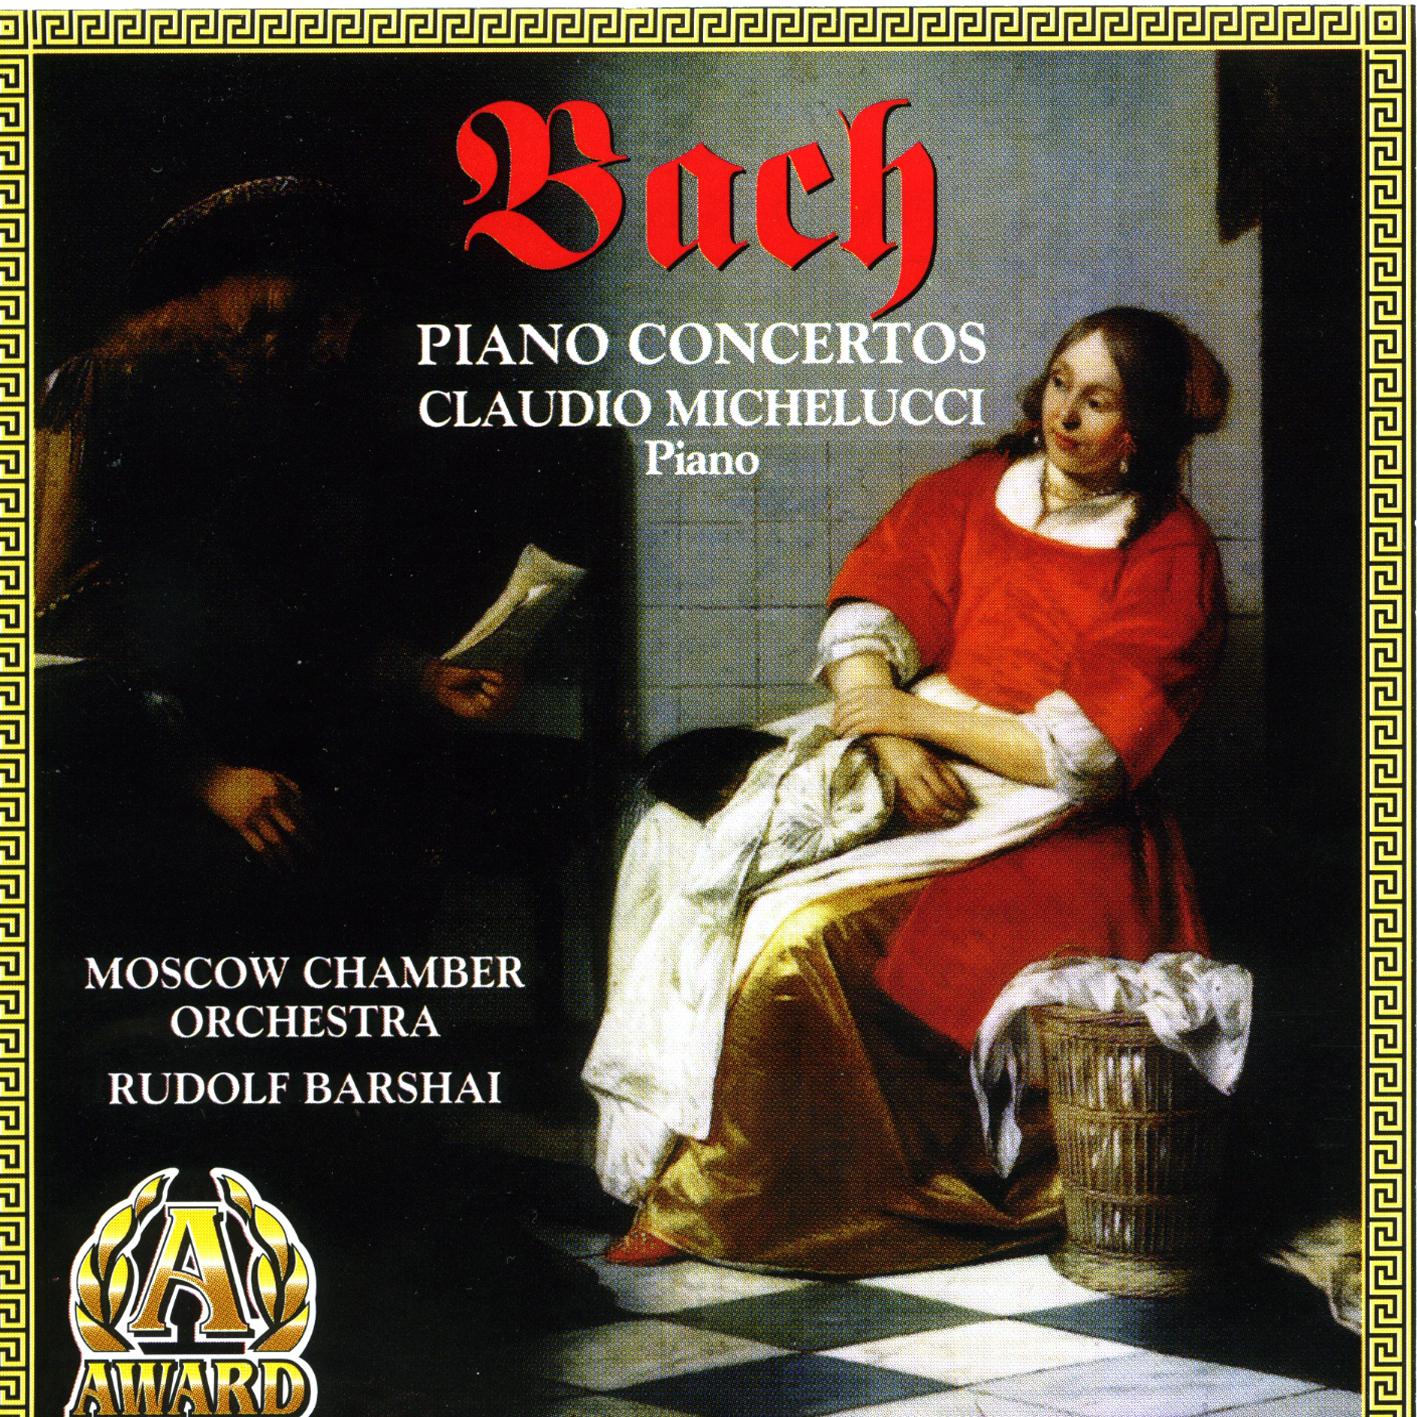 Piano Concerto In Dm BWV 1052: Allegro, Adagio, Allegro